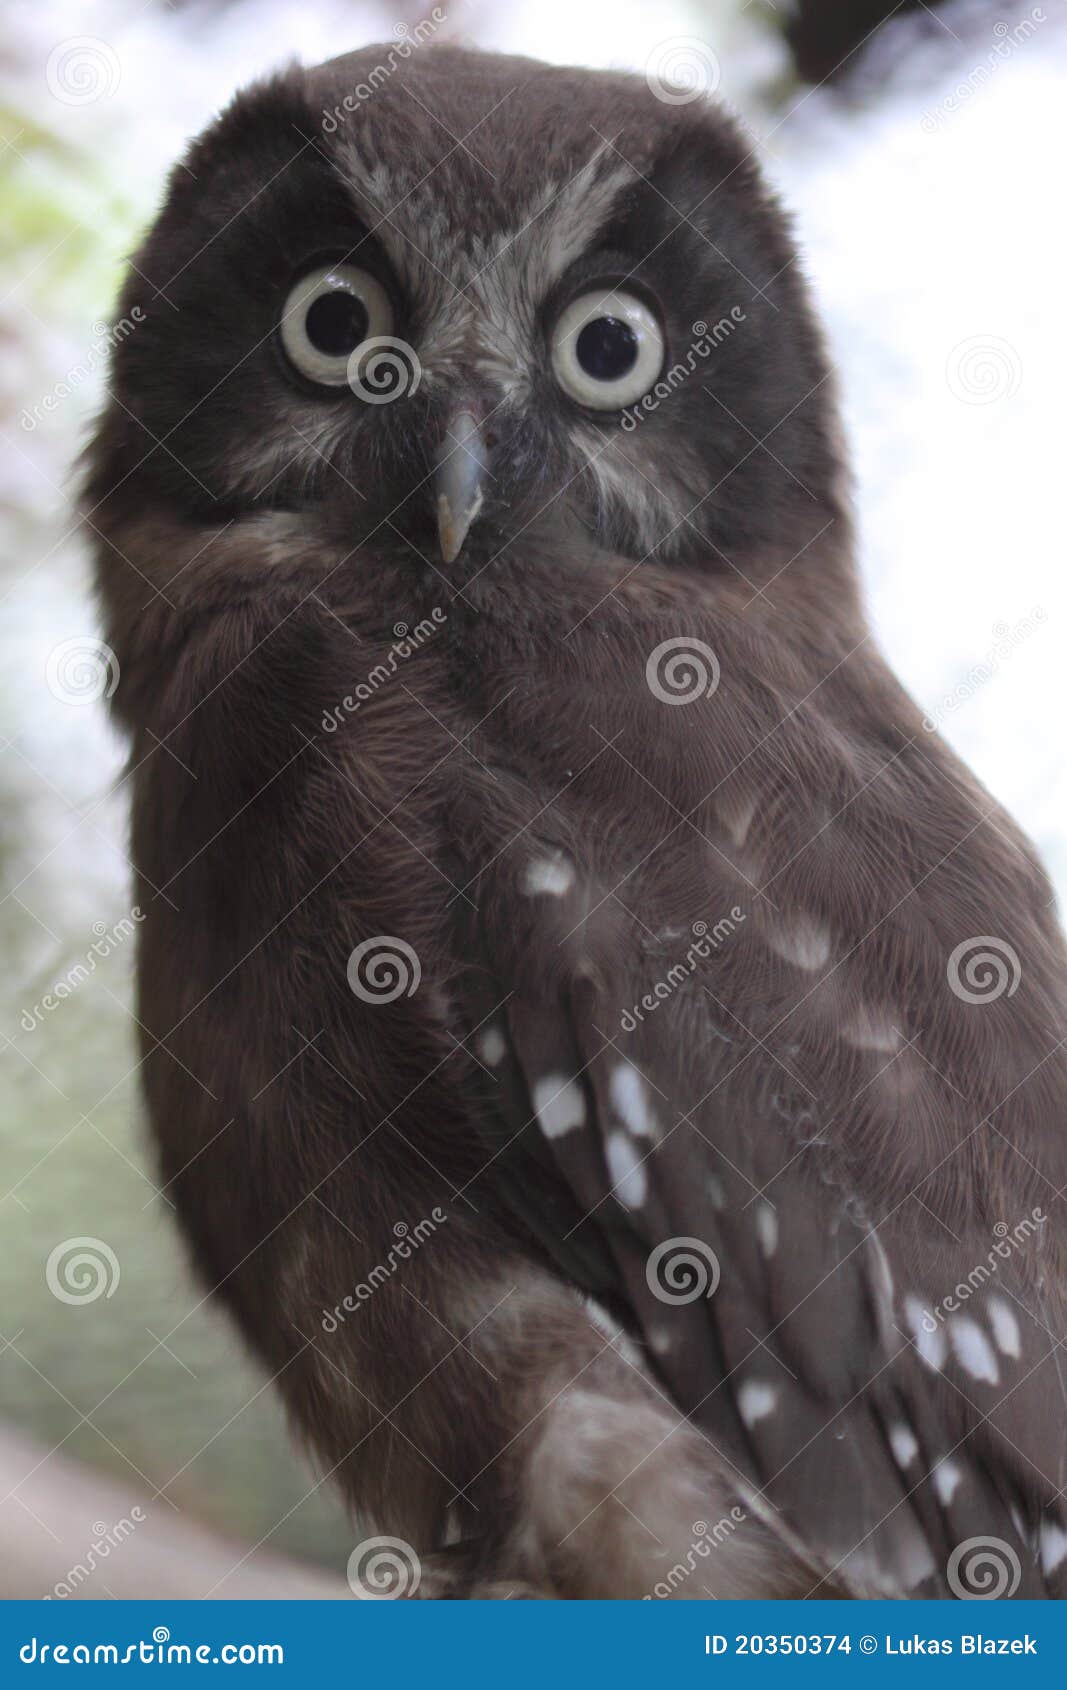 boreal owl